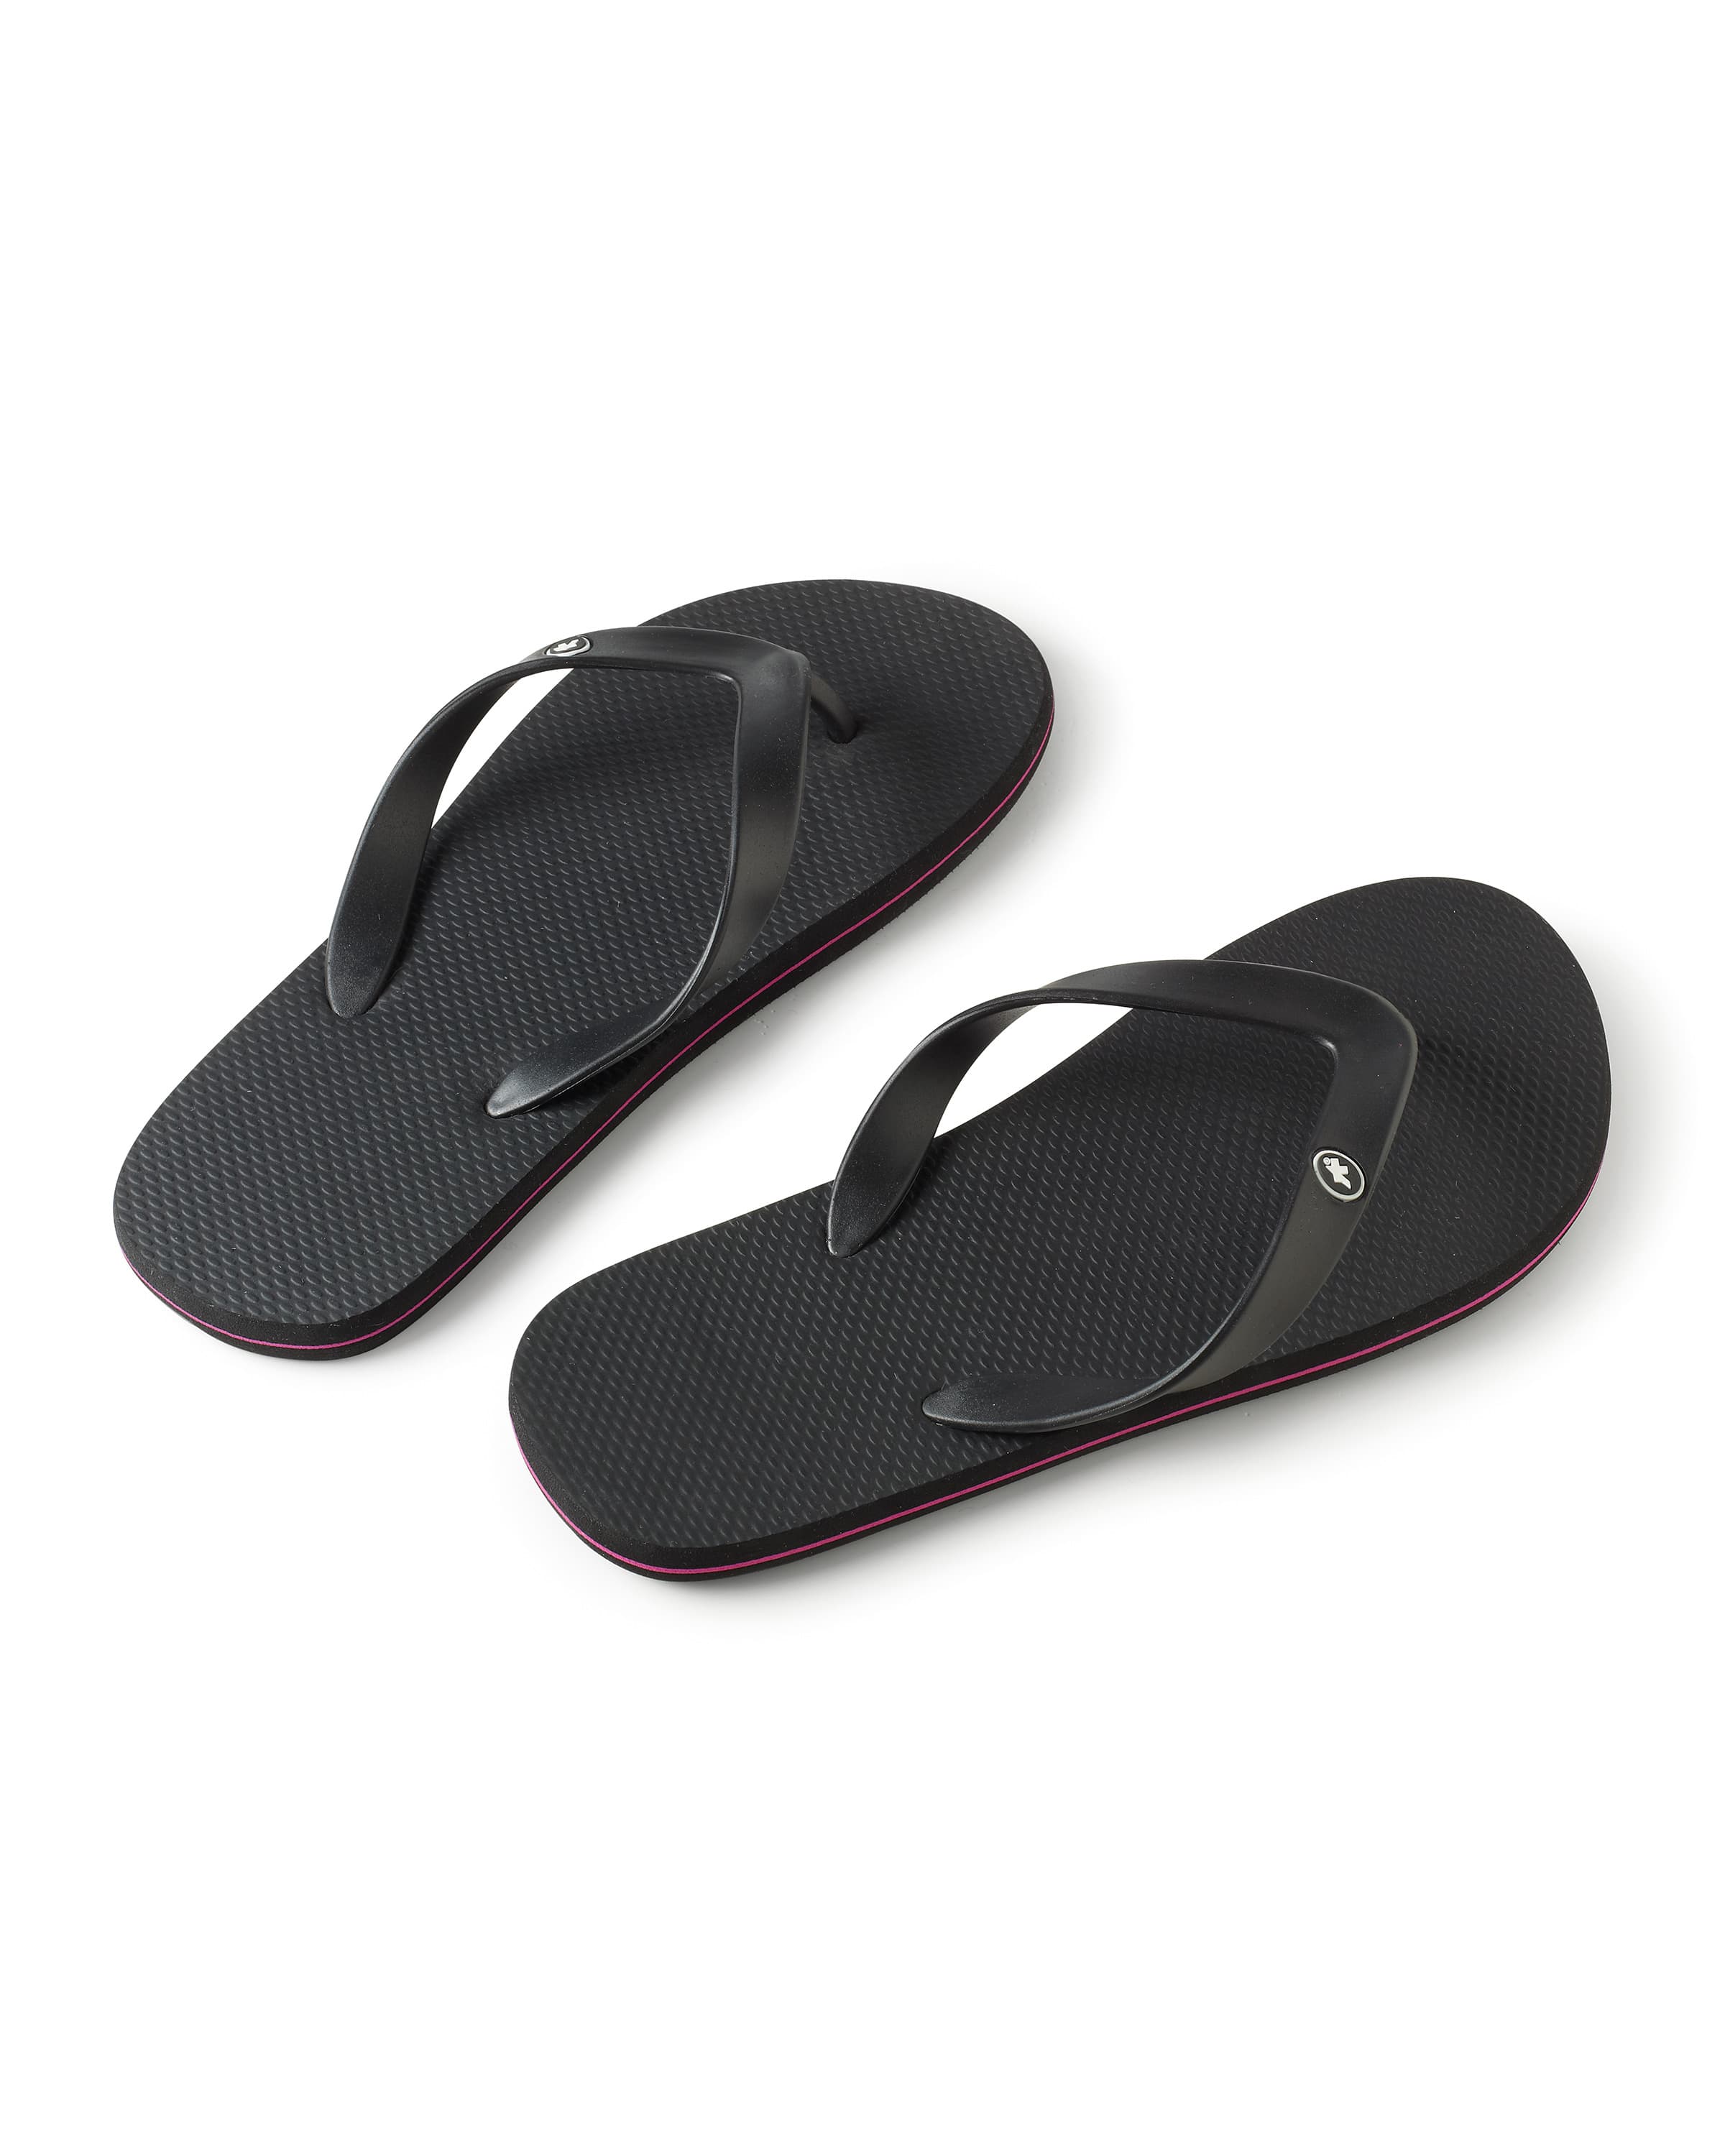 Flip flops & slides – Suitable for men and women alike